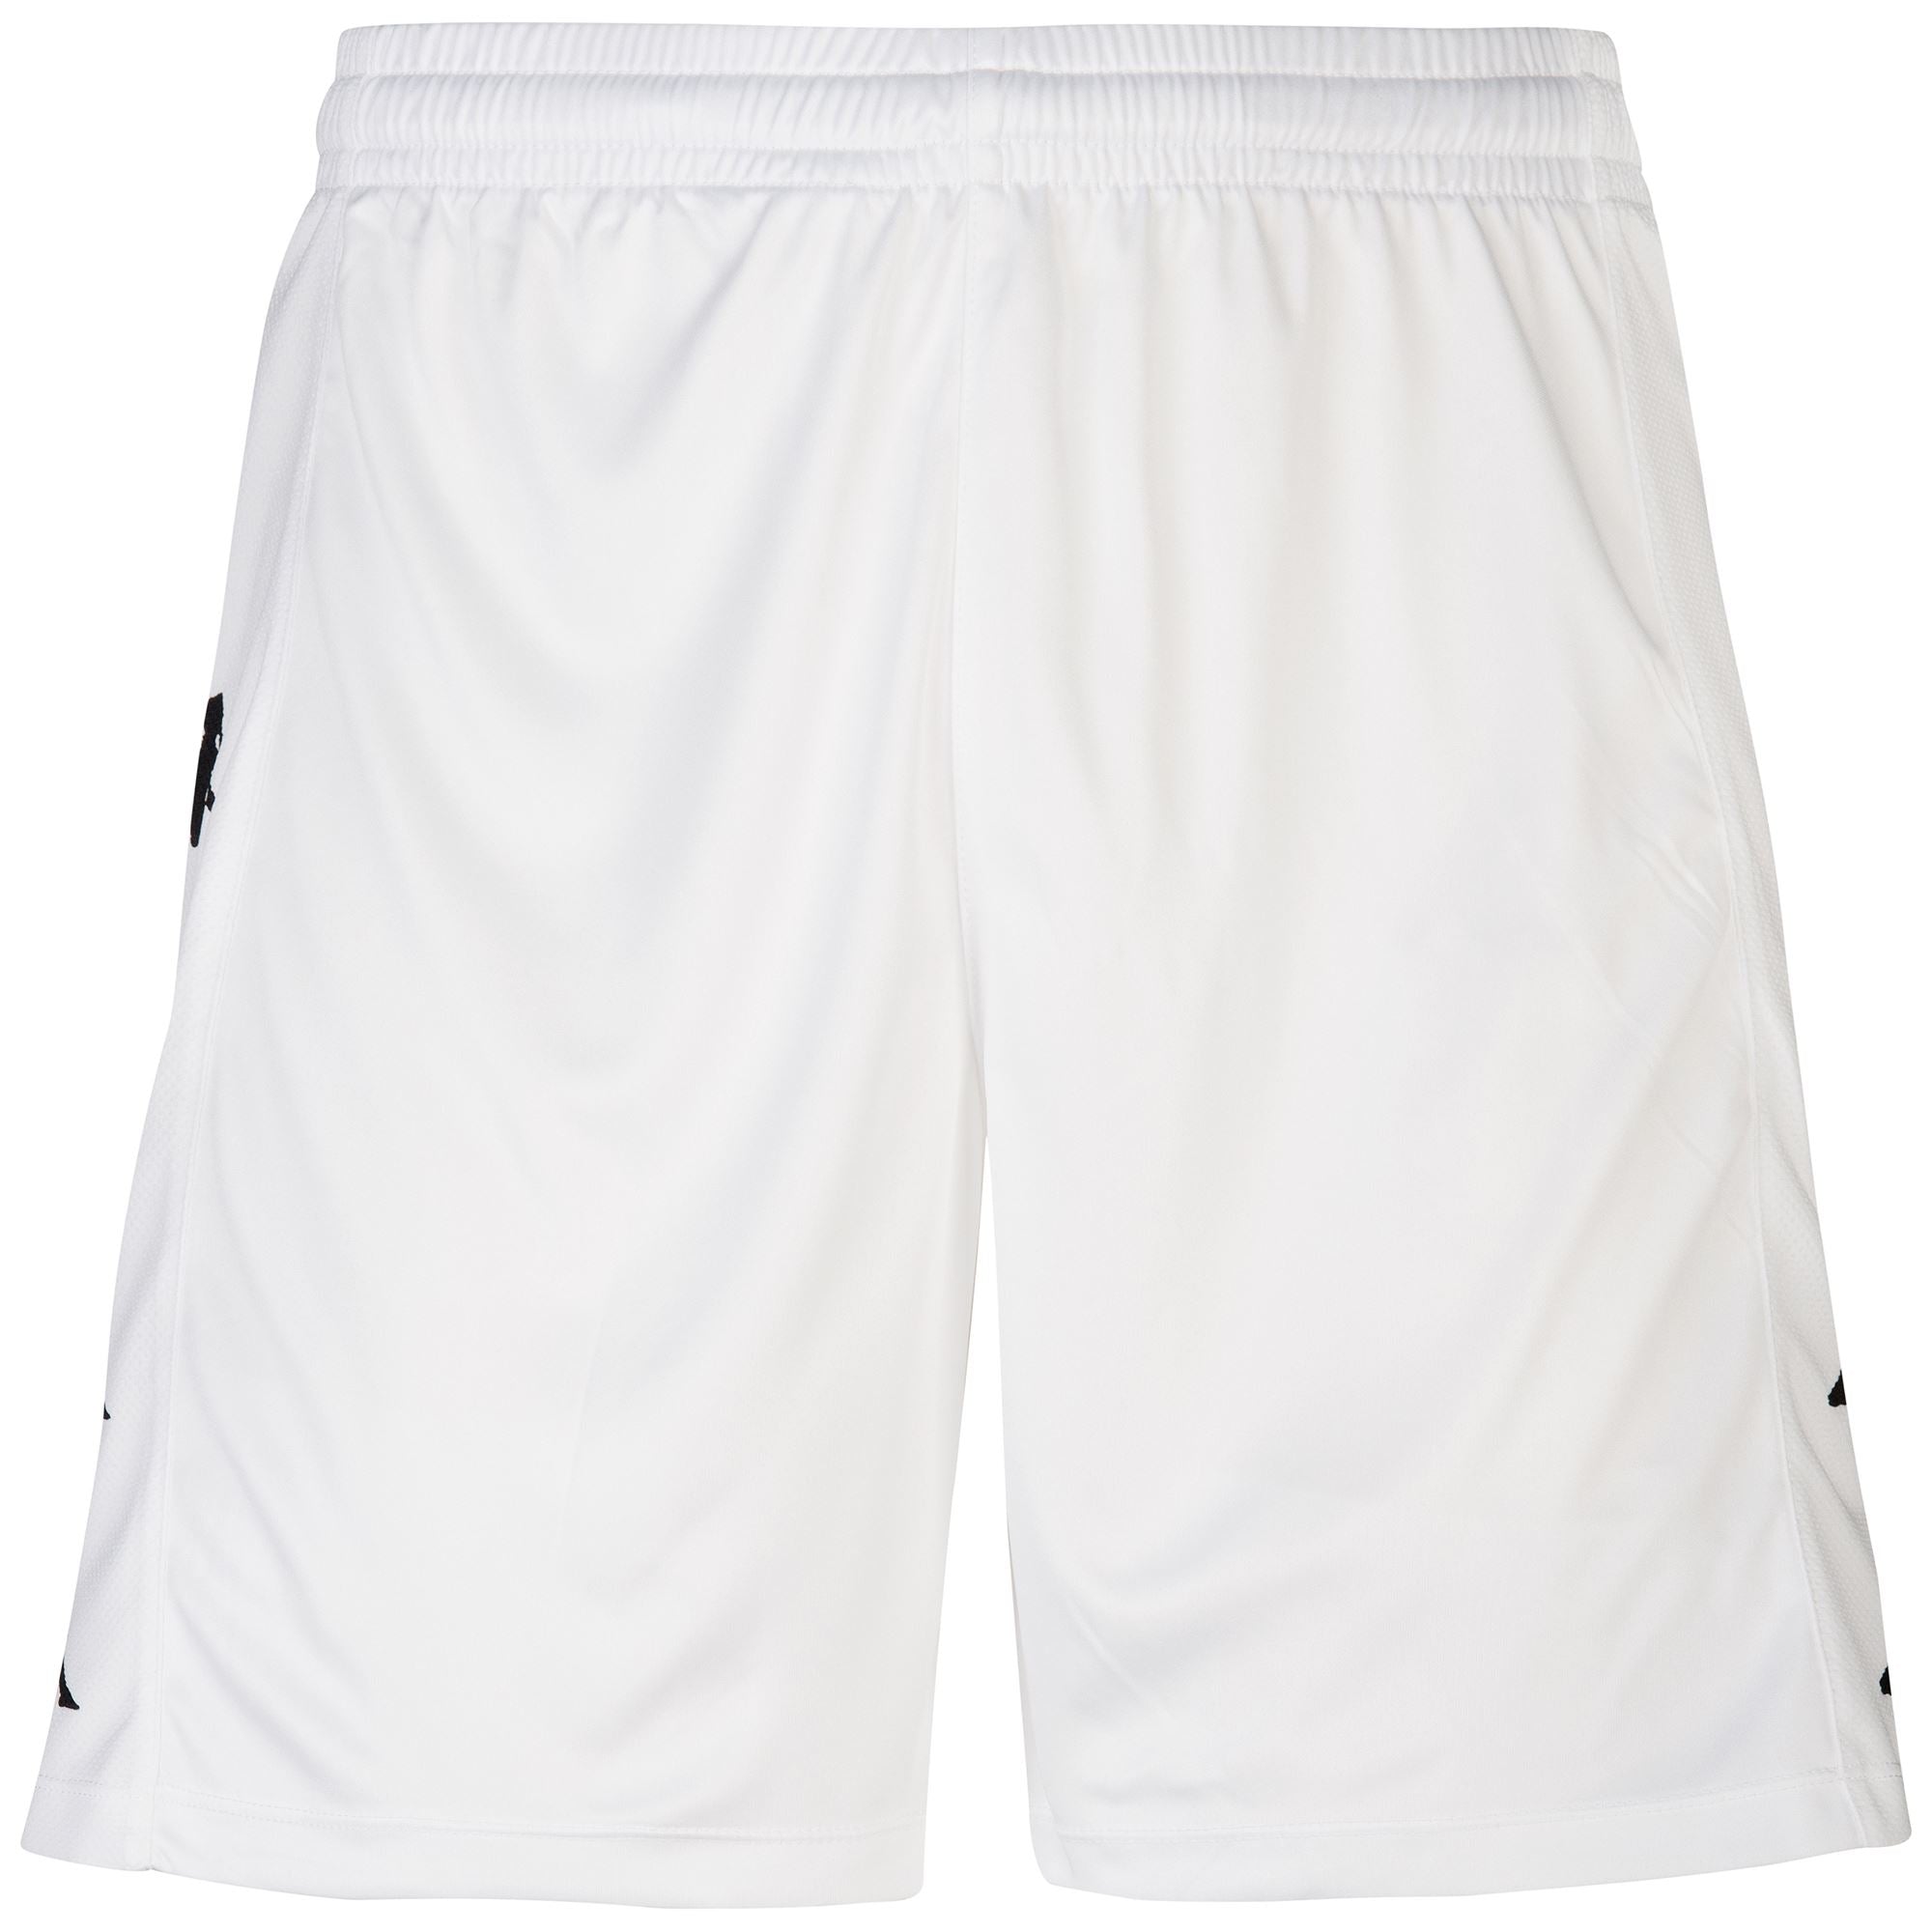 Shorts Man KAPPA4SOCCER DELEBIO Sport Shorts WHITE